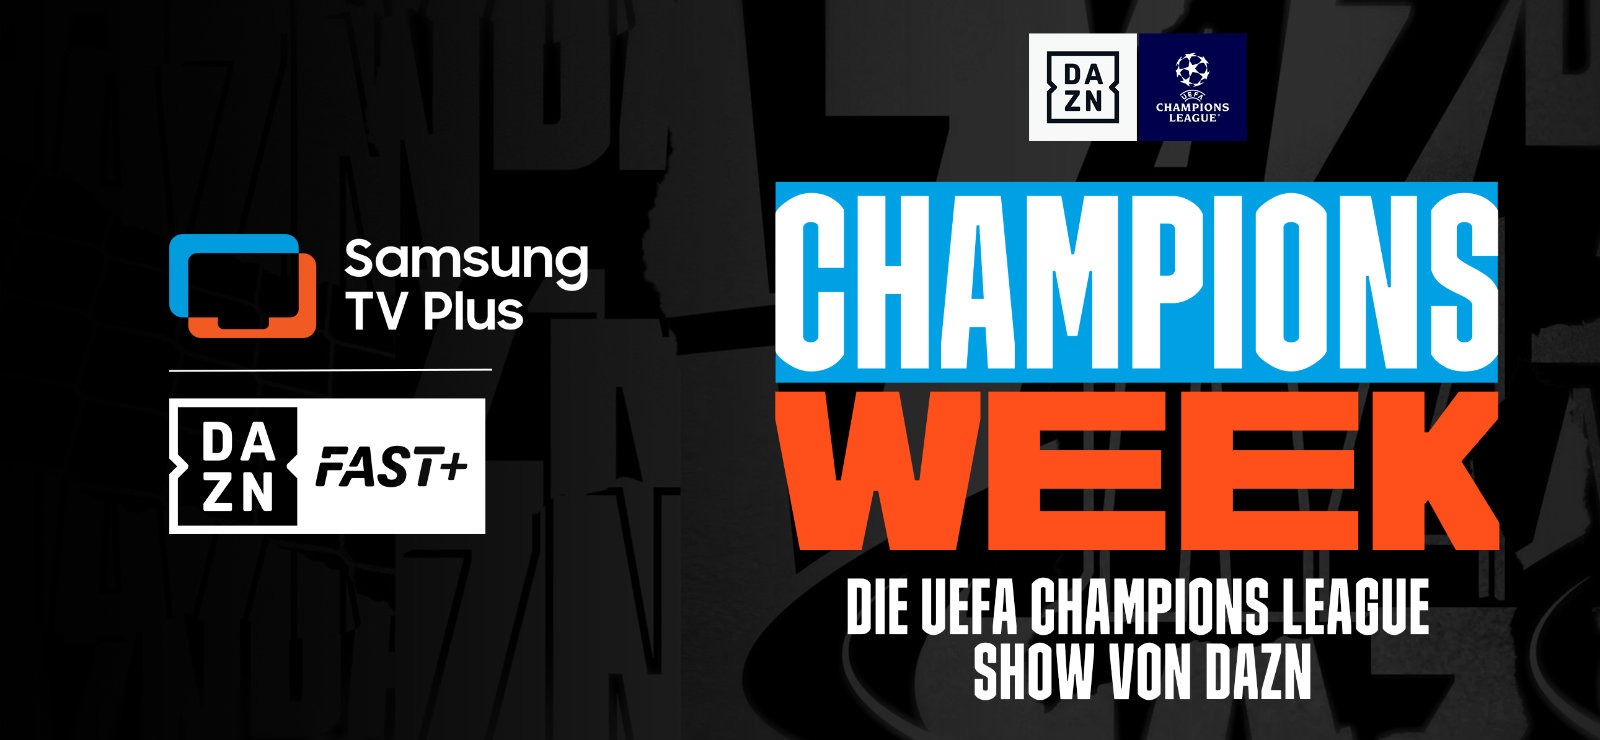 UEFA-Champions-League-Show „Champions Week“ über DAZN Fast+ bei Samsung TV Plus